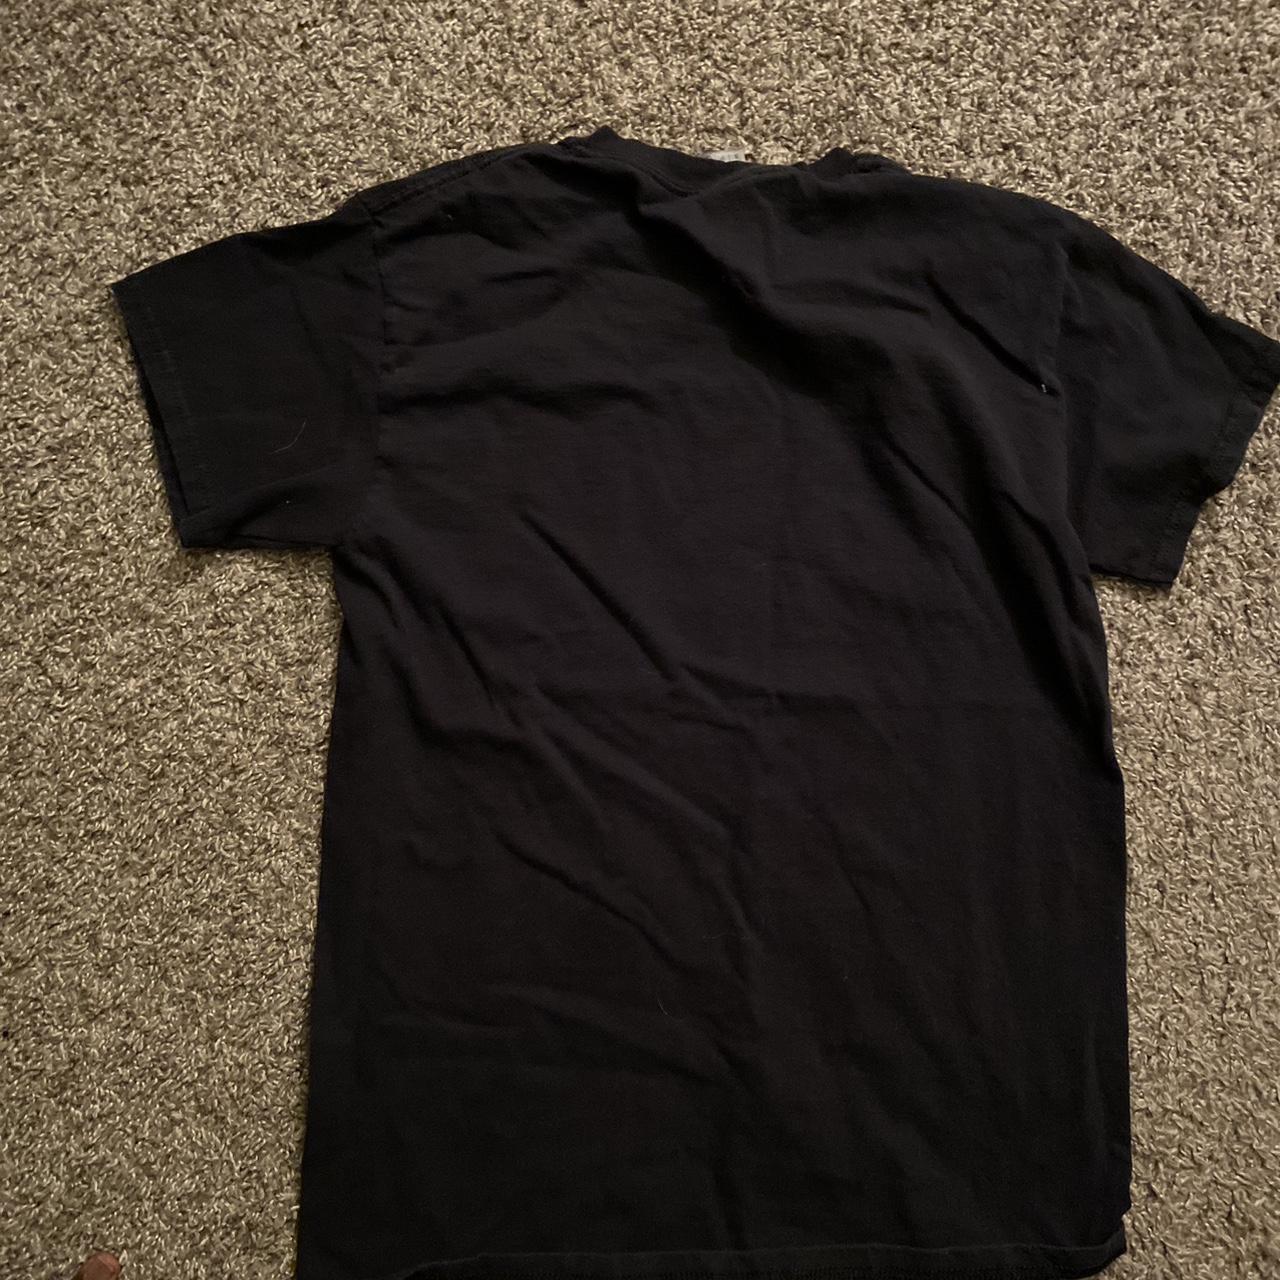 JNCO Men's Black T-shirt | Depop